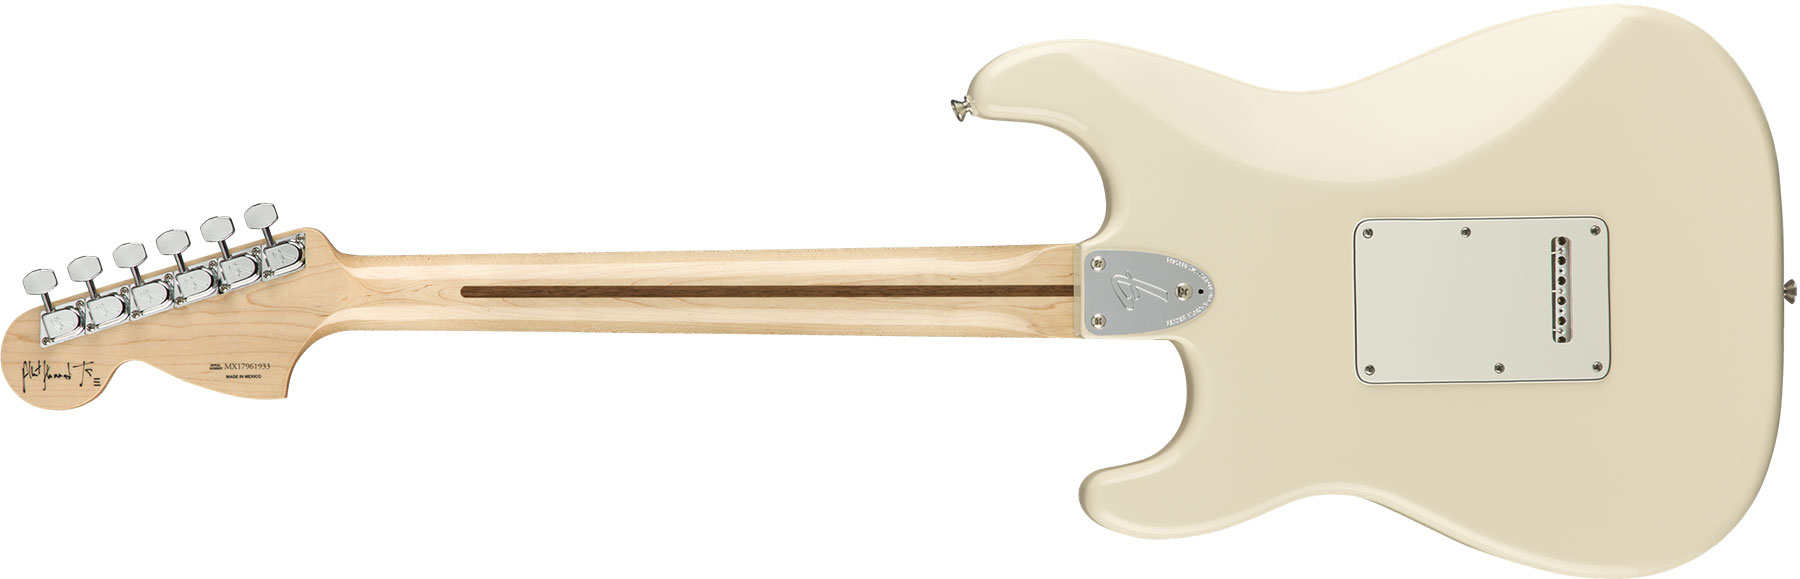 Fender Albert Hammond Strat Mex Signature 3s Trem Rw - Olympic White - Guitarra eléctrica con forma de str. - Variation 1